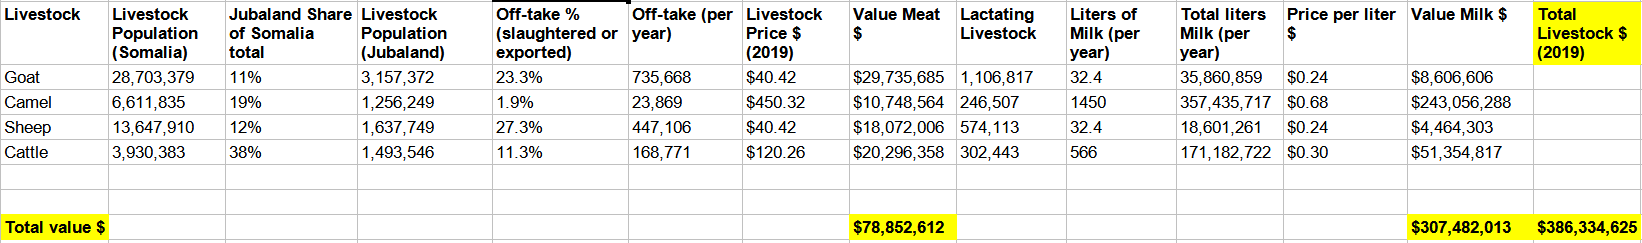 Livestock value.png